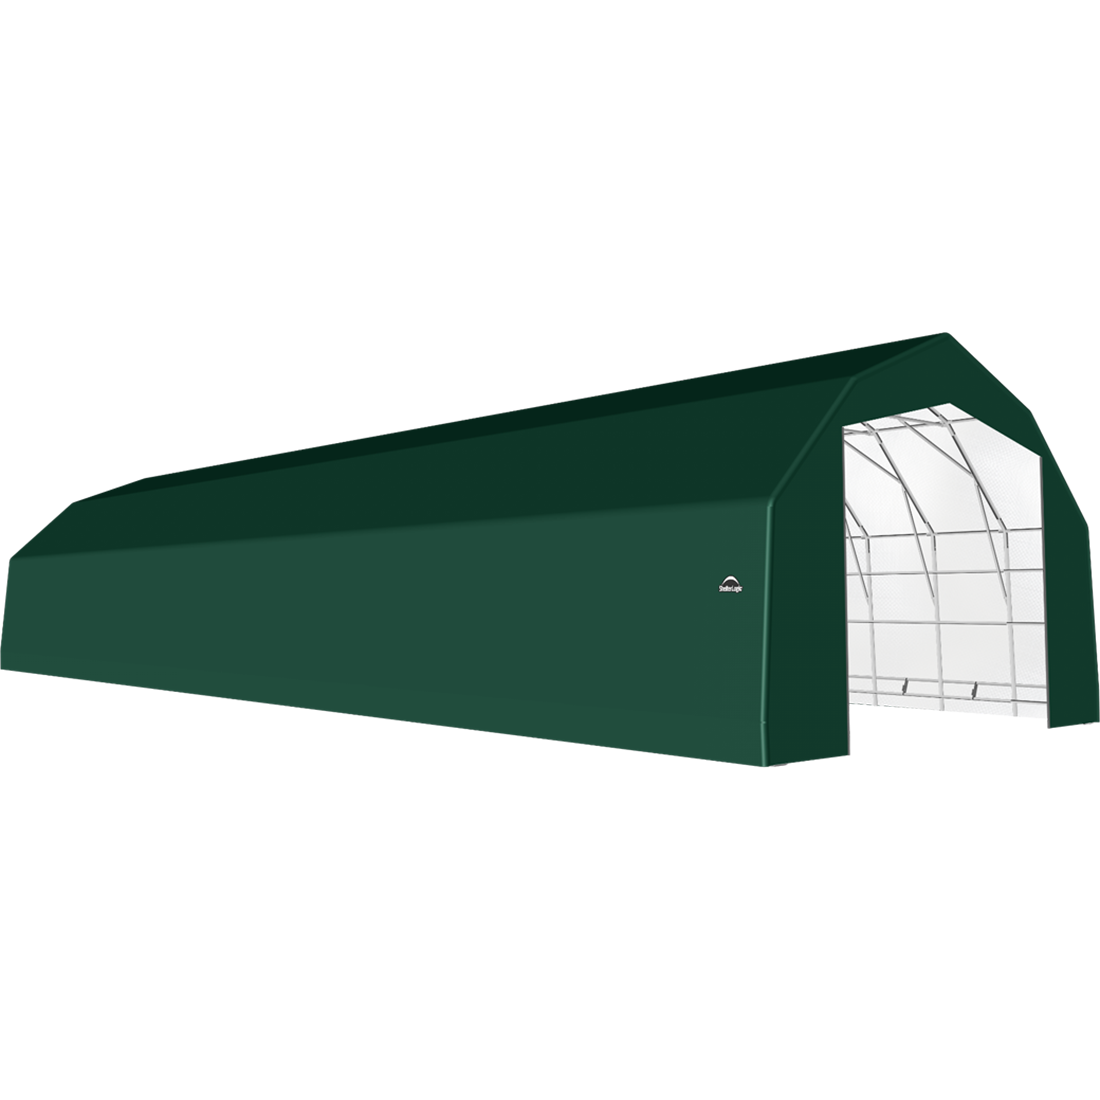 ShelterTech SP Series Barn Shelter, 25 ft. x 80 ft. x 17 ft. Heavy Duty PVC 14.5 oz. Green